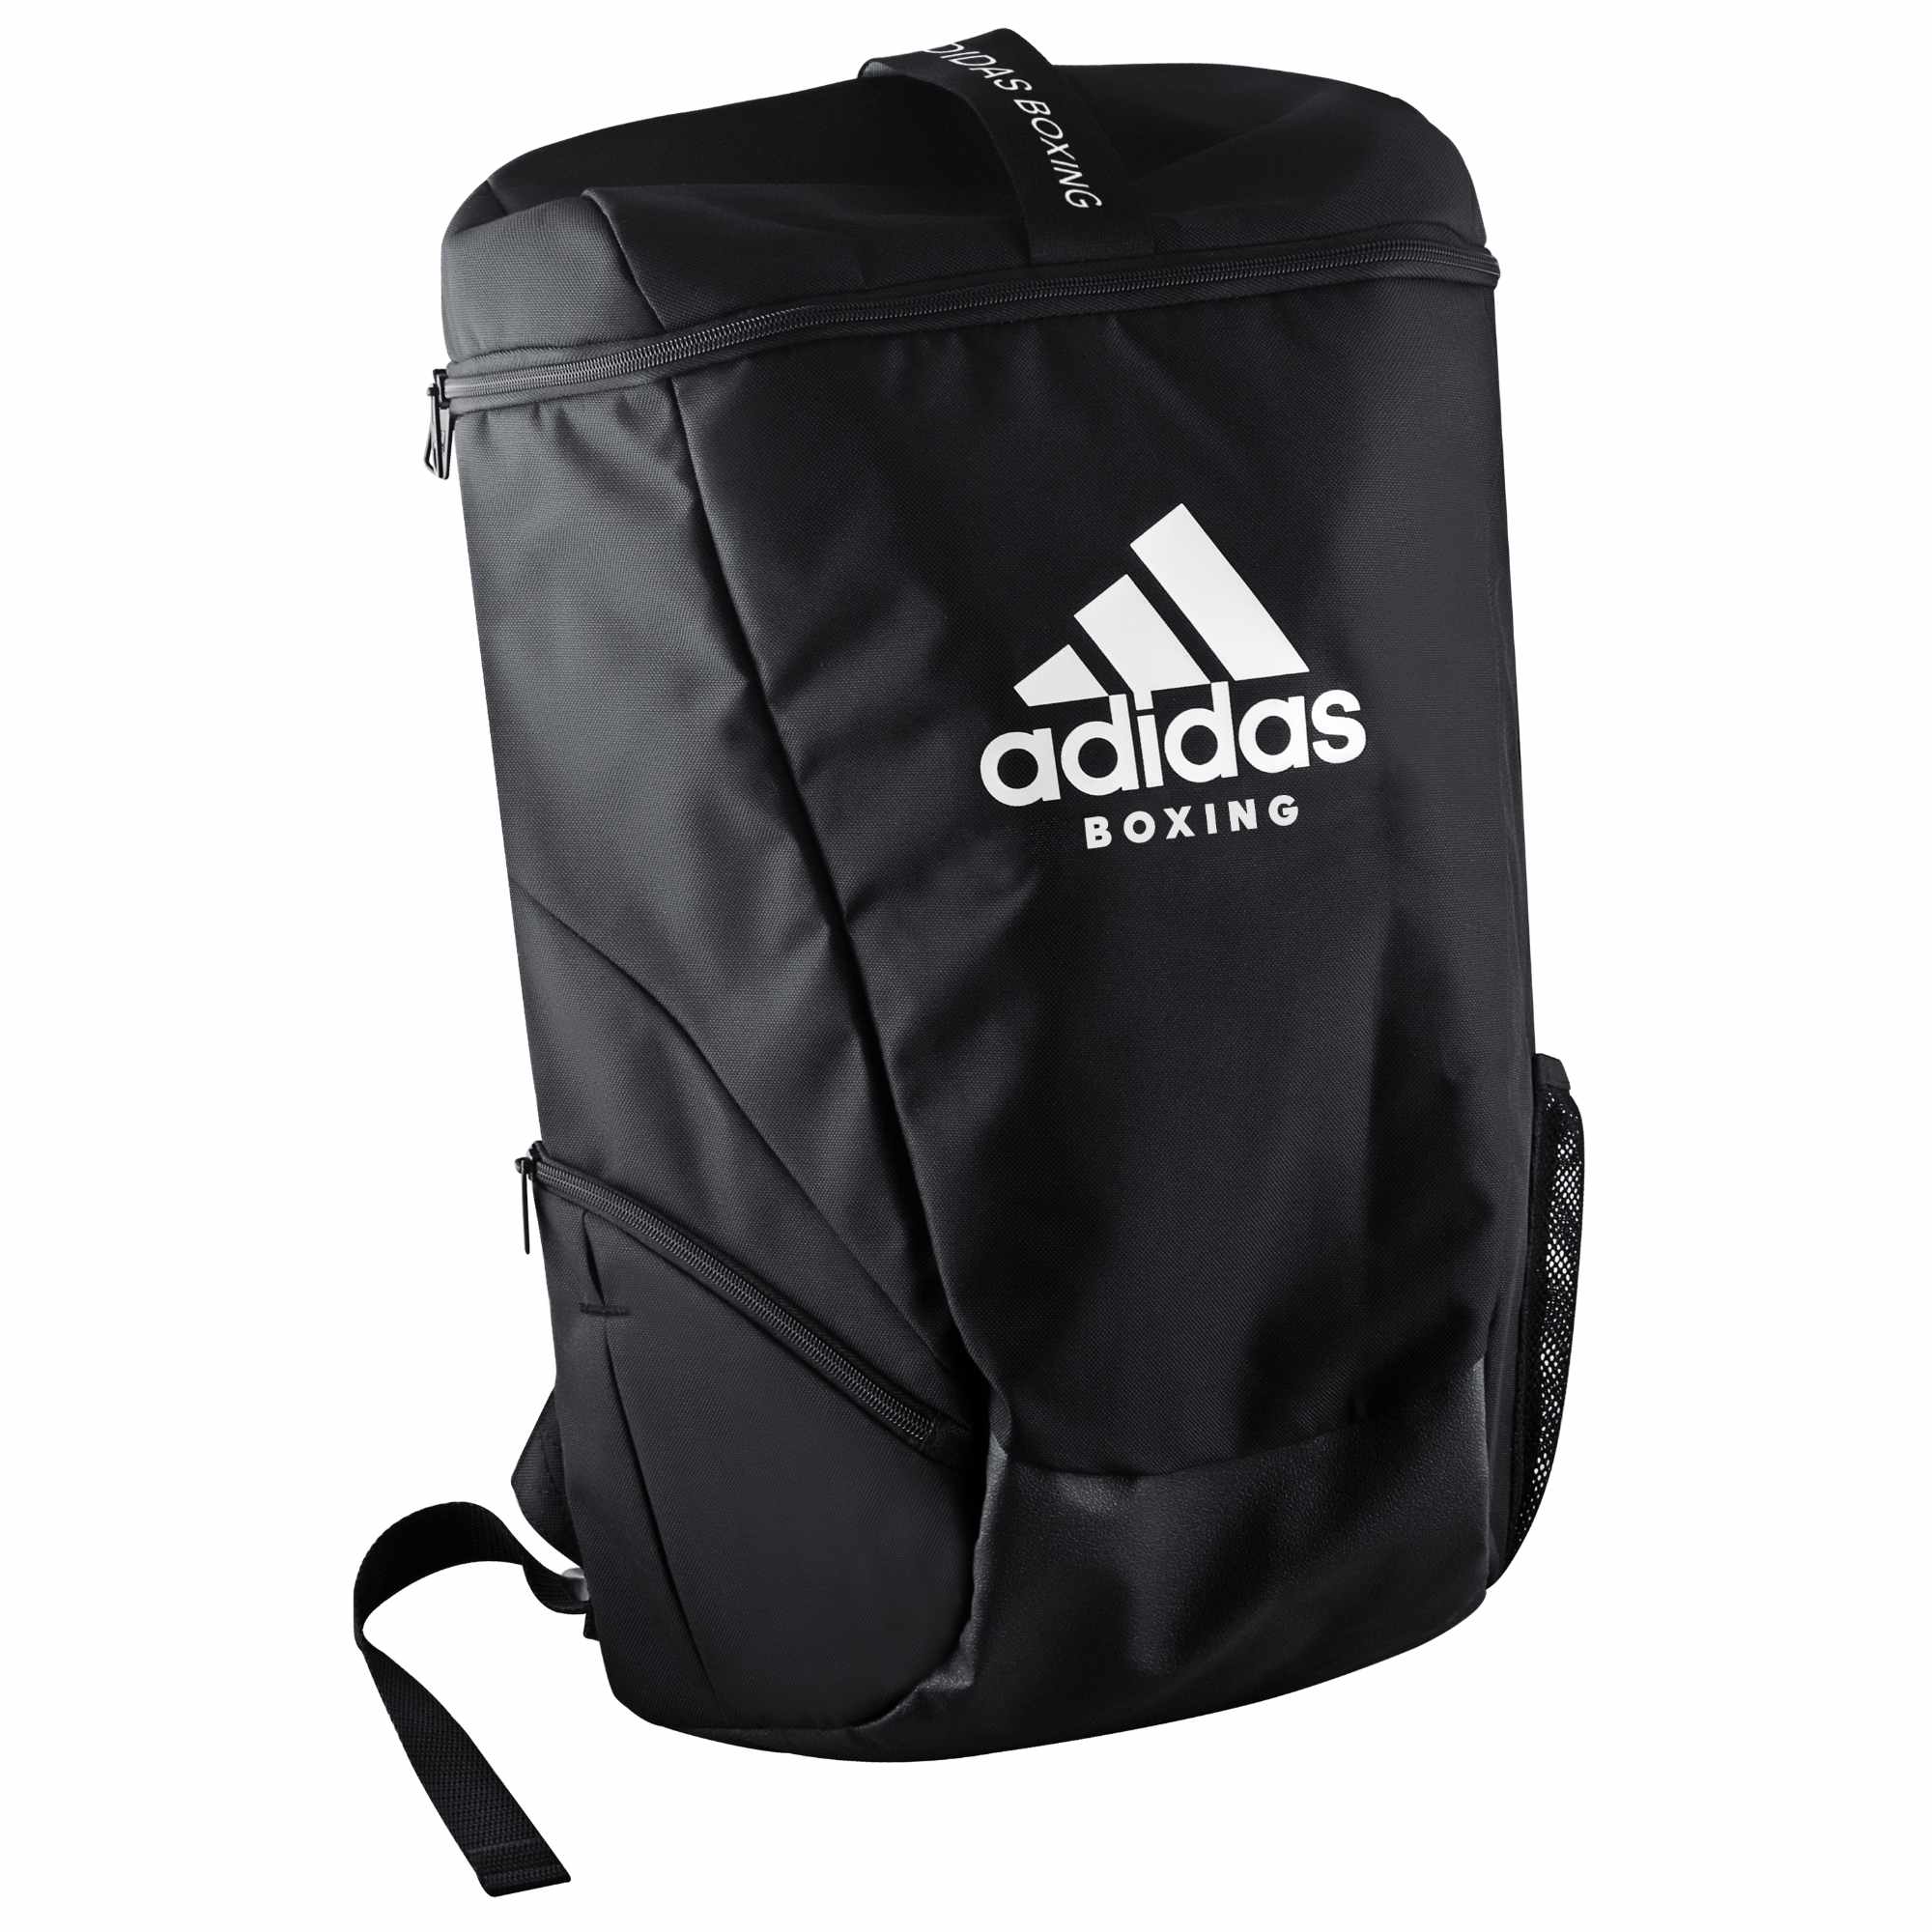 adidas backpack Boxing adiACC090B, black/white